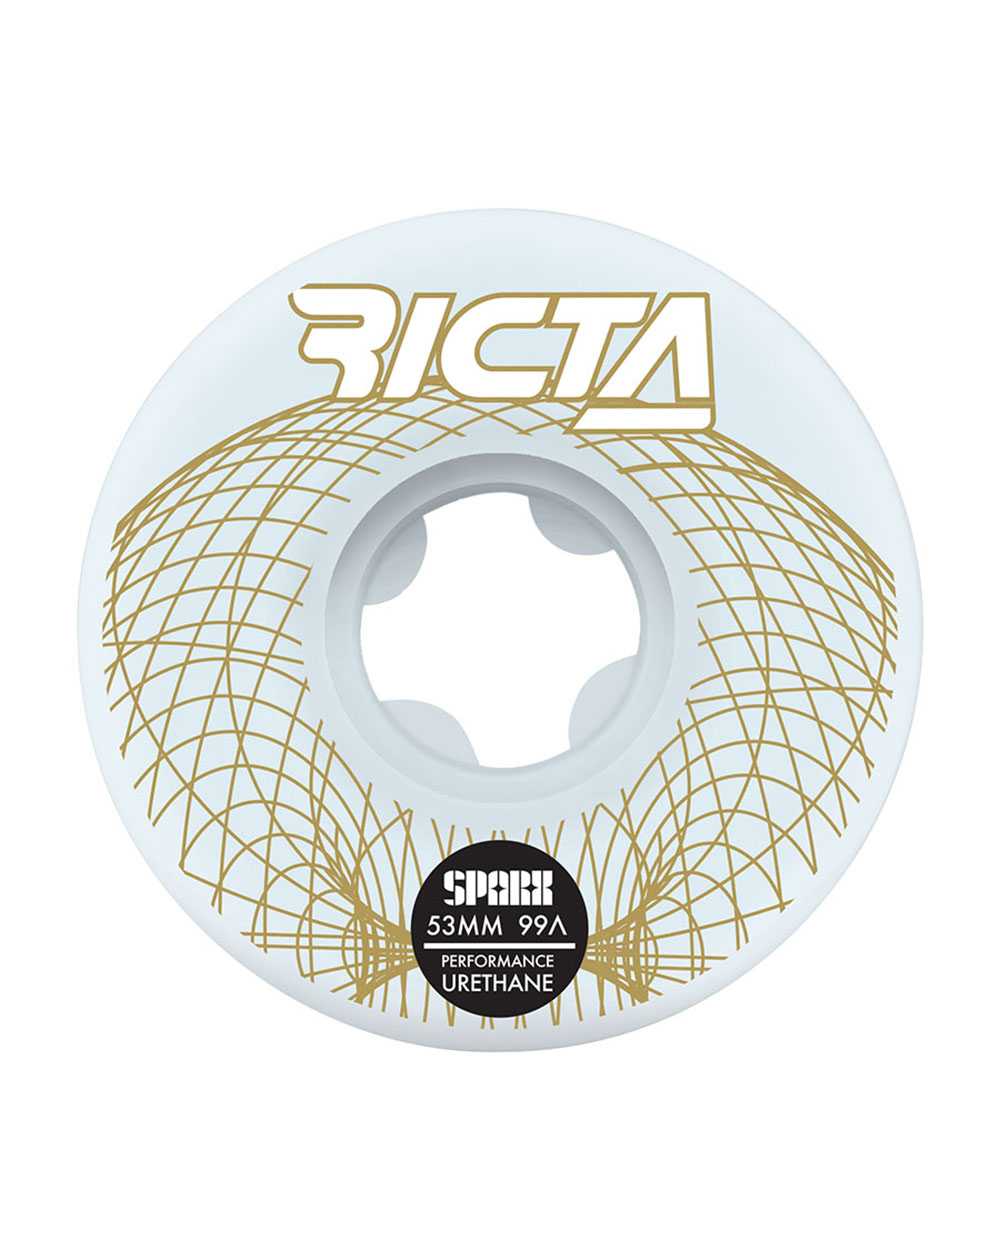 Ricta Ruote Skateboard Sparx (Wireframe) 53mm 99A 4 pz